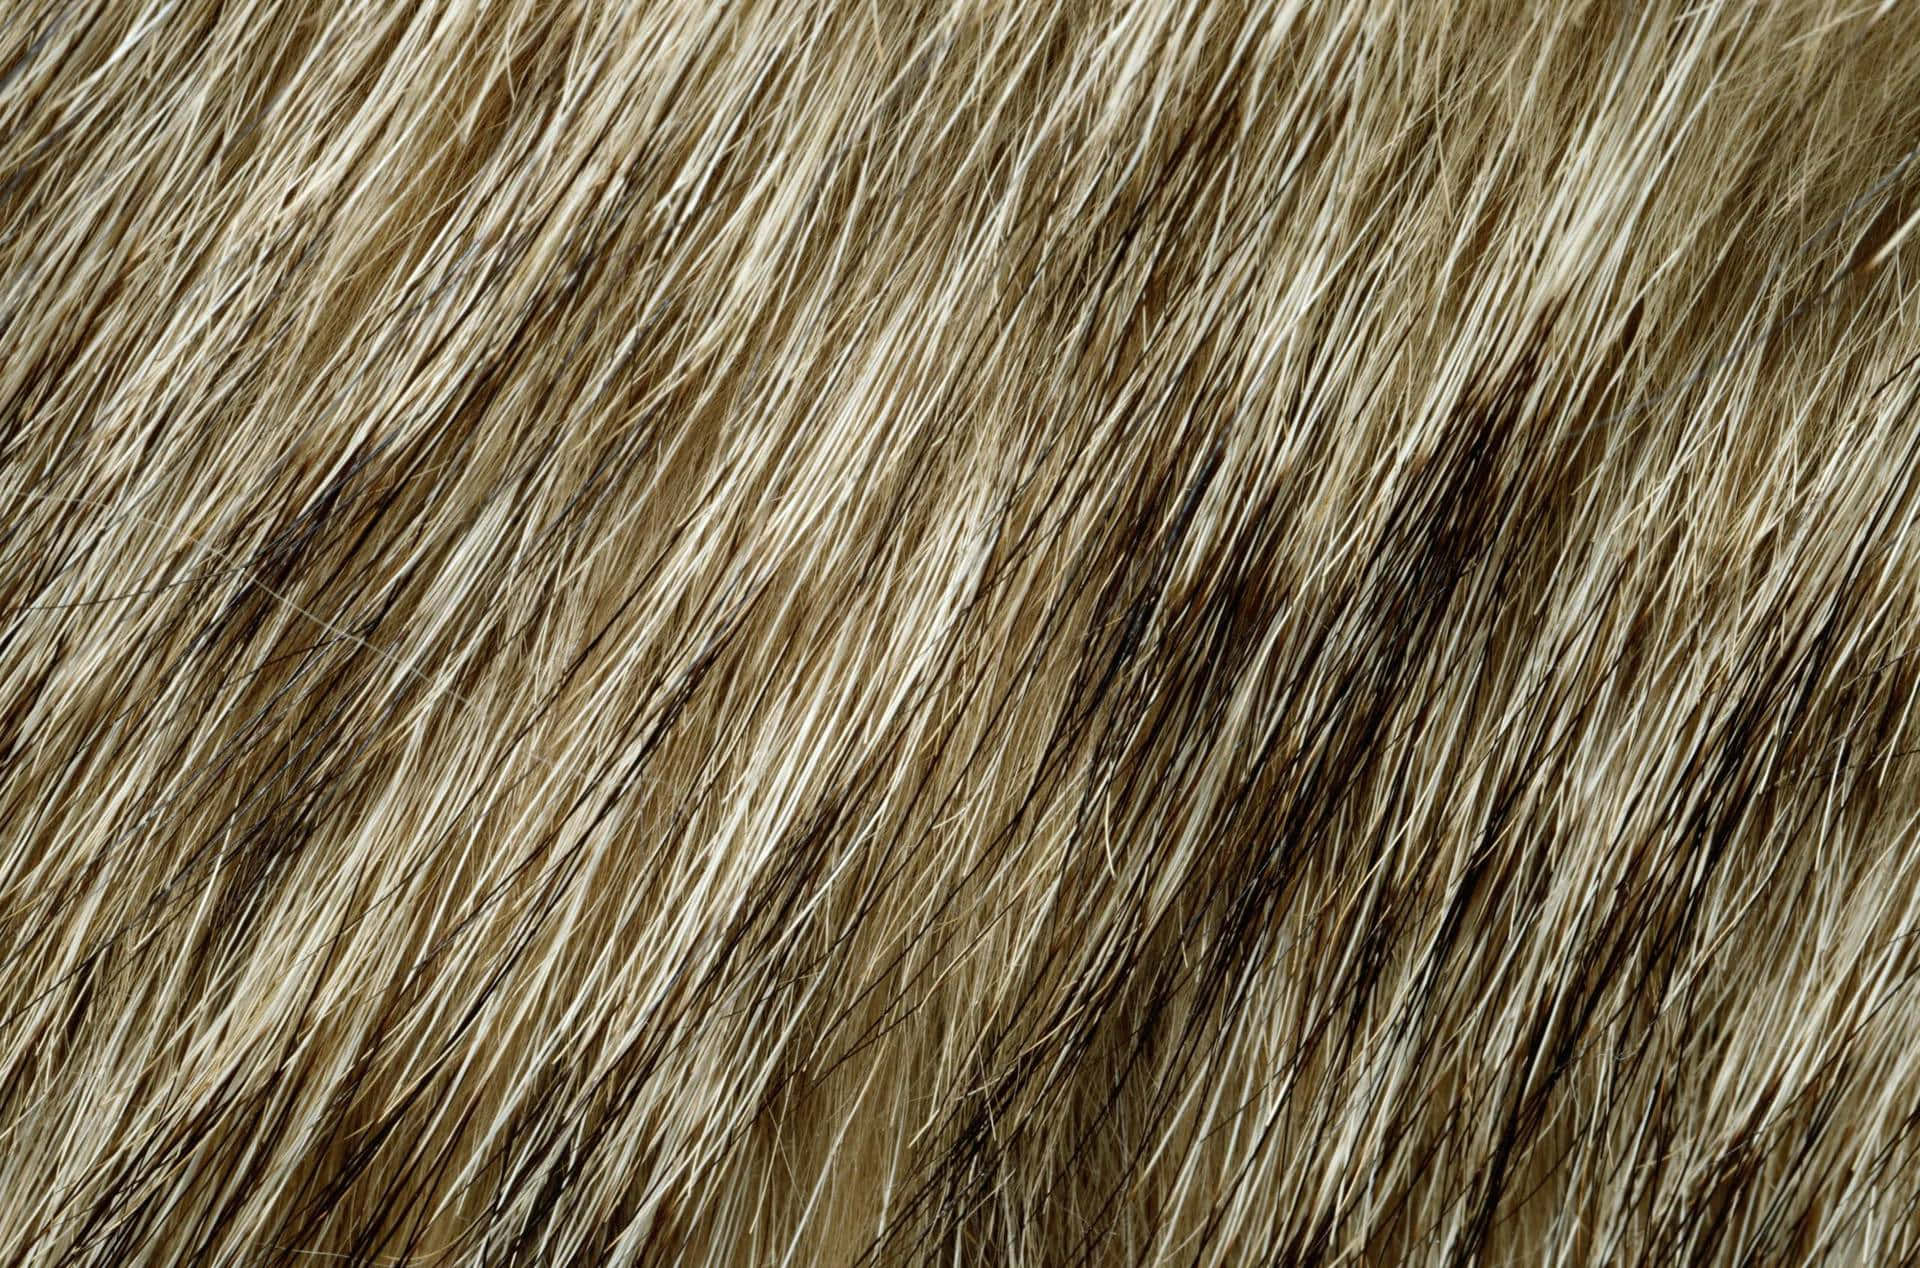 A Close Up Of A Brown Fur Texture